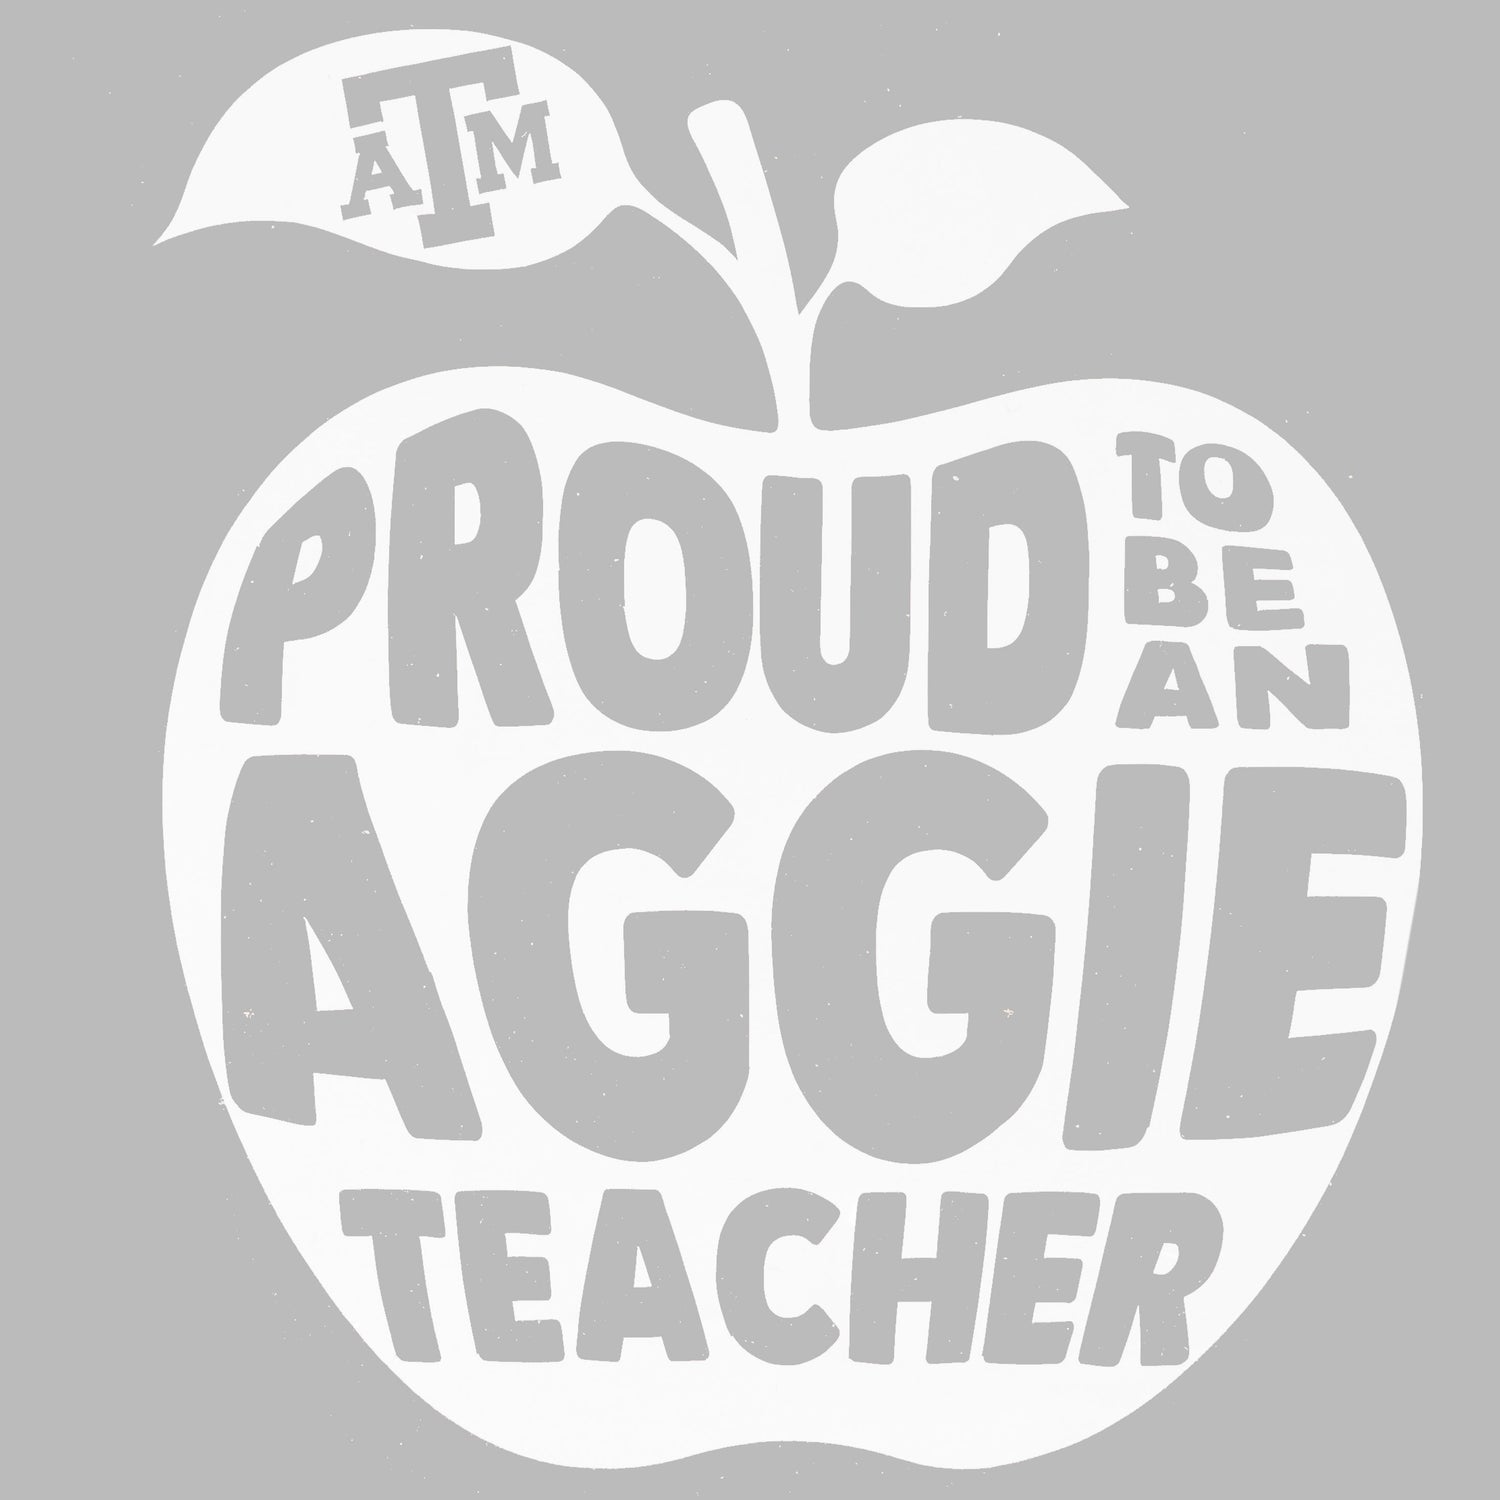 Texas A&M Proud To Be An Aggie Teacher Decal